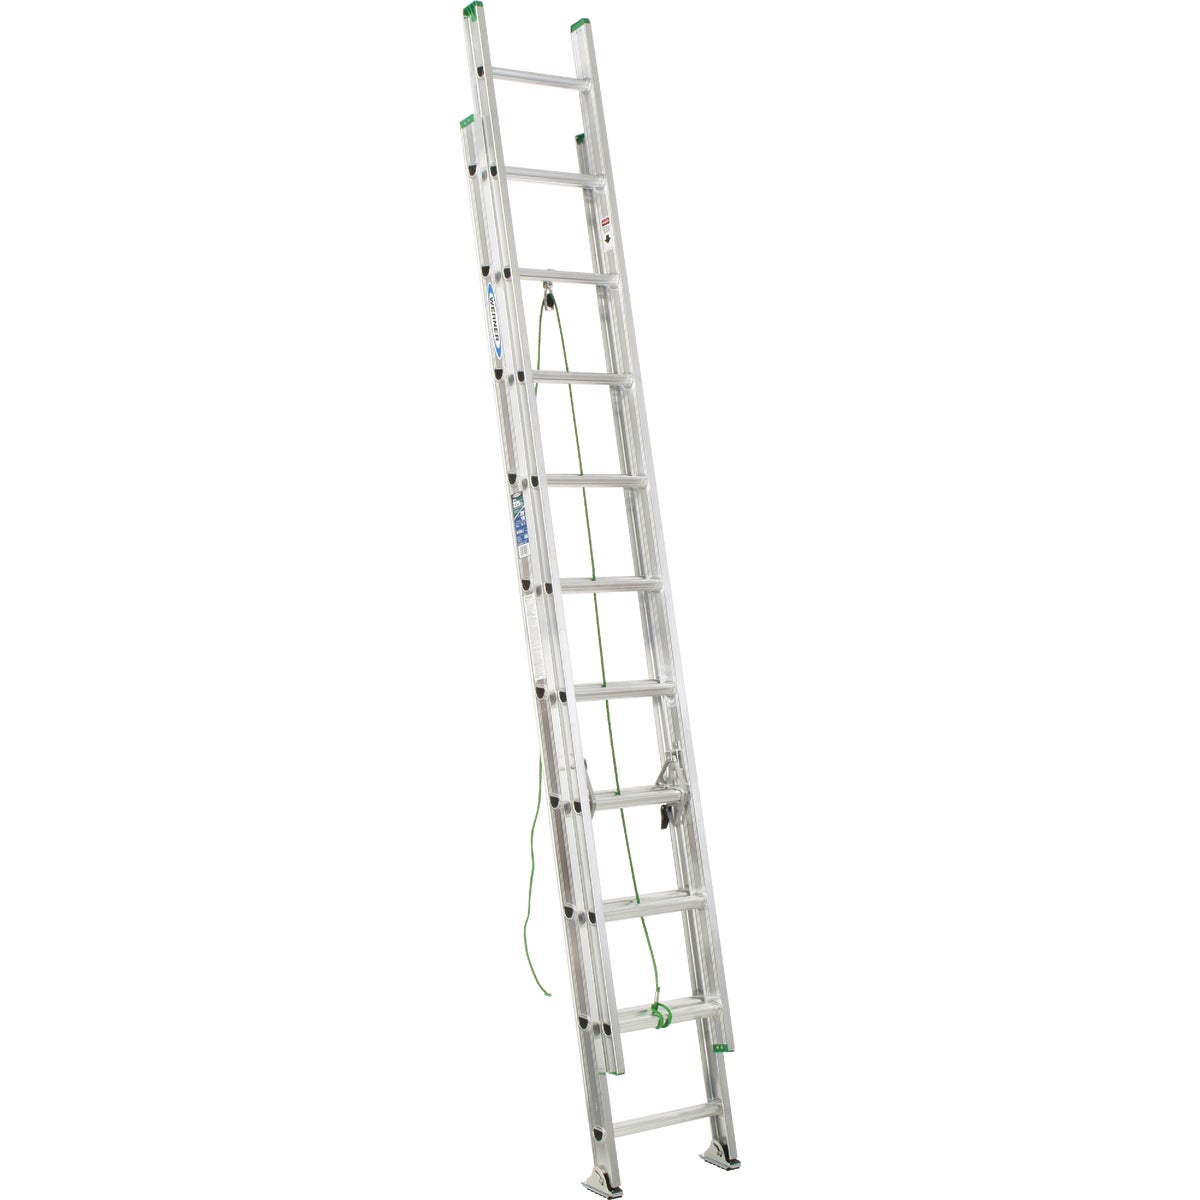 Item 782291, Aluminum extension ladder has a duty rating of 225 Lb.